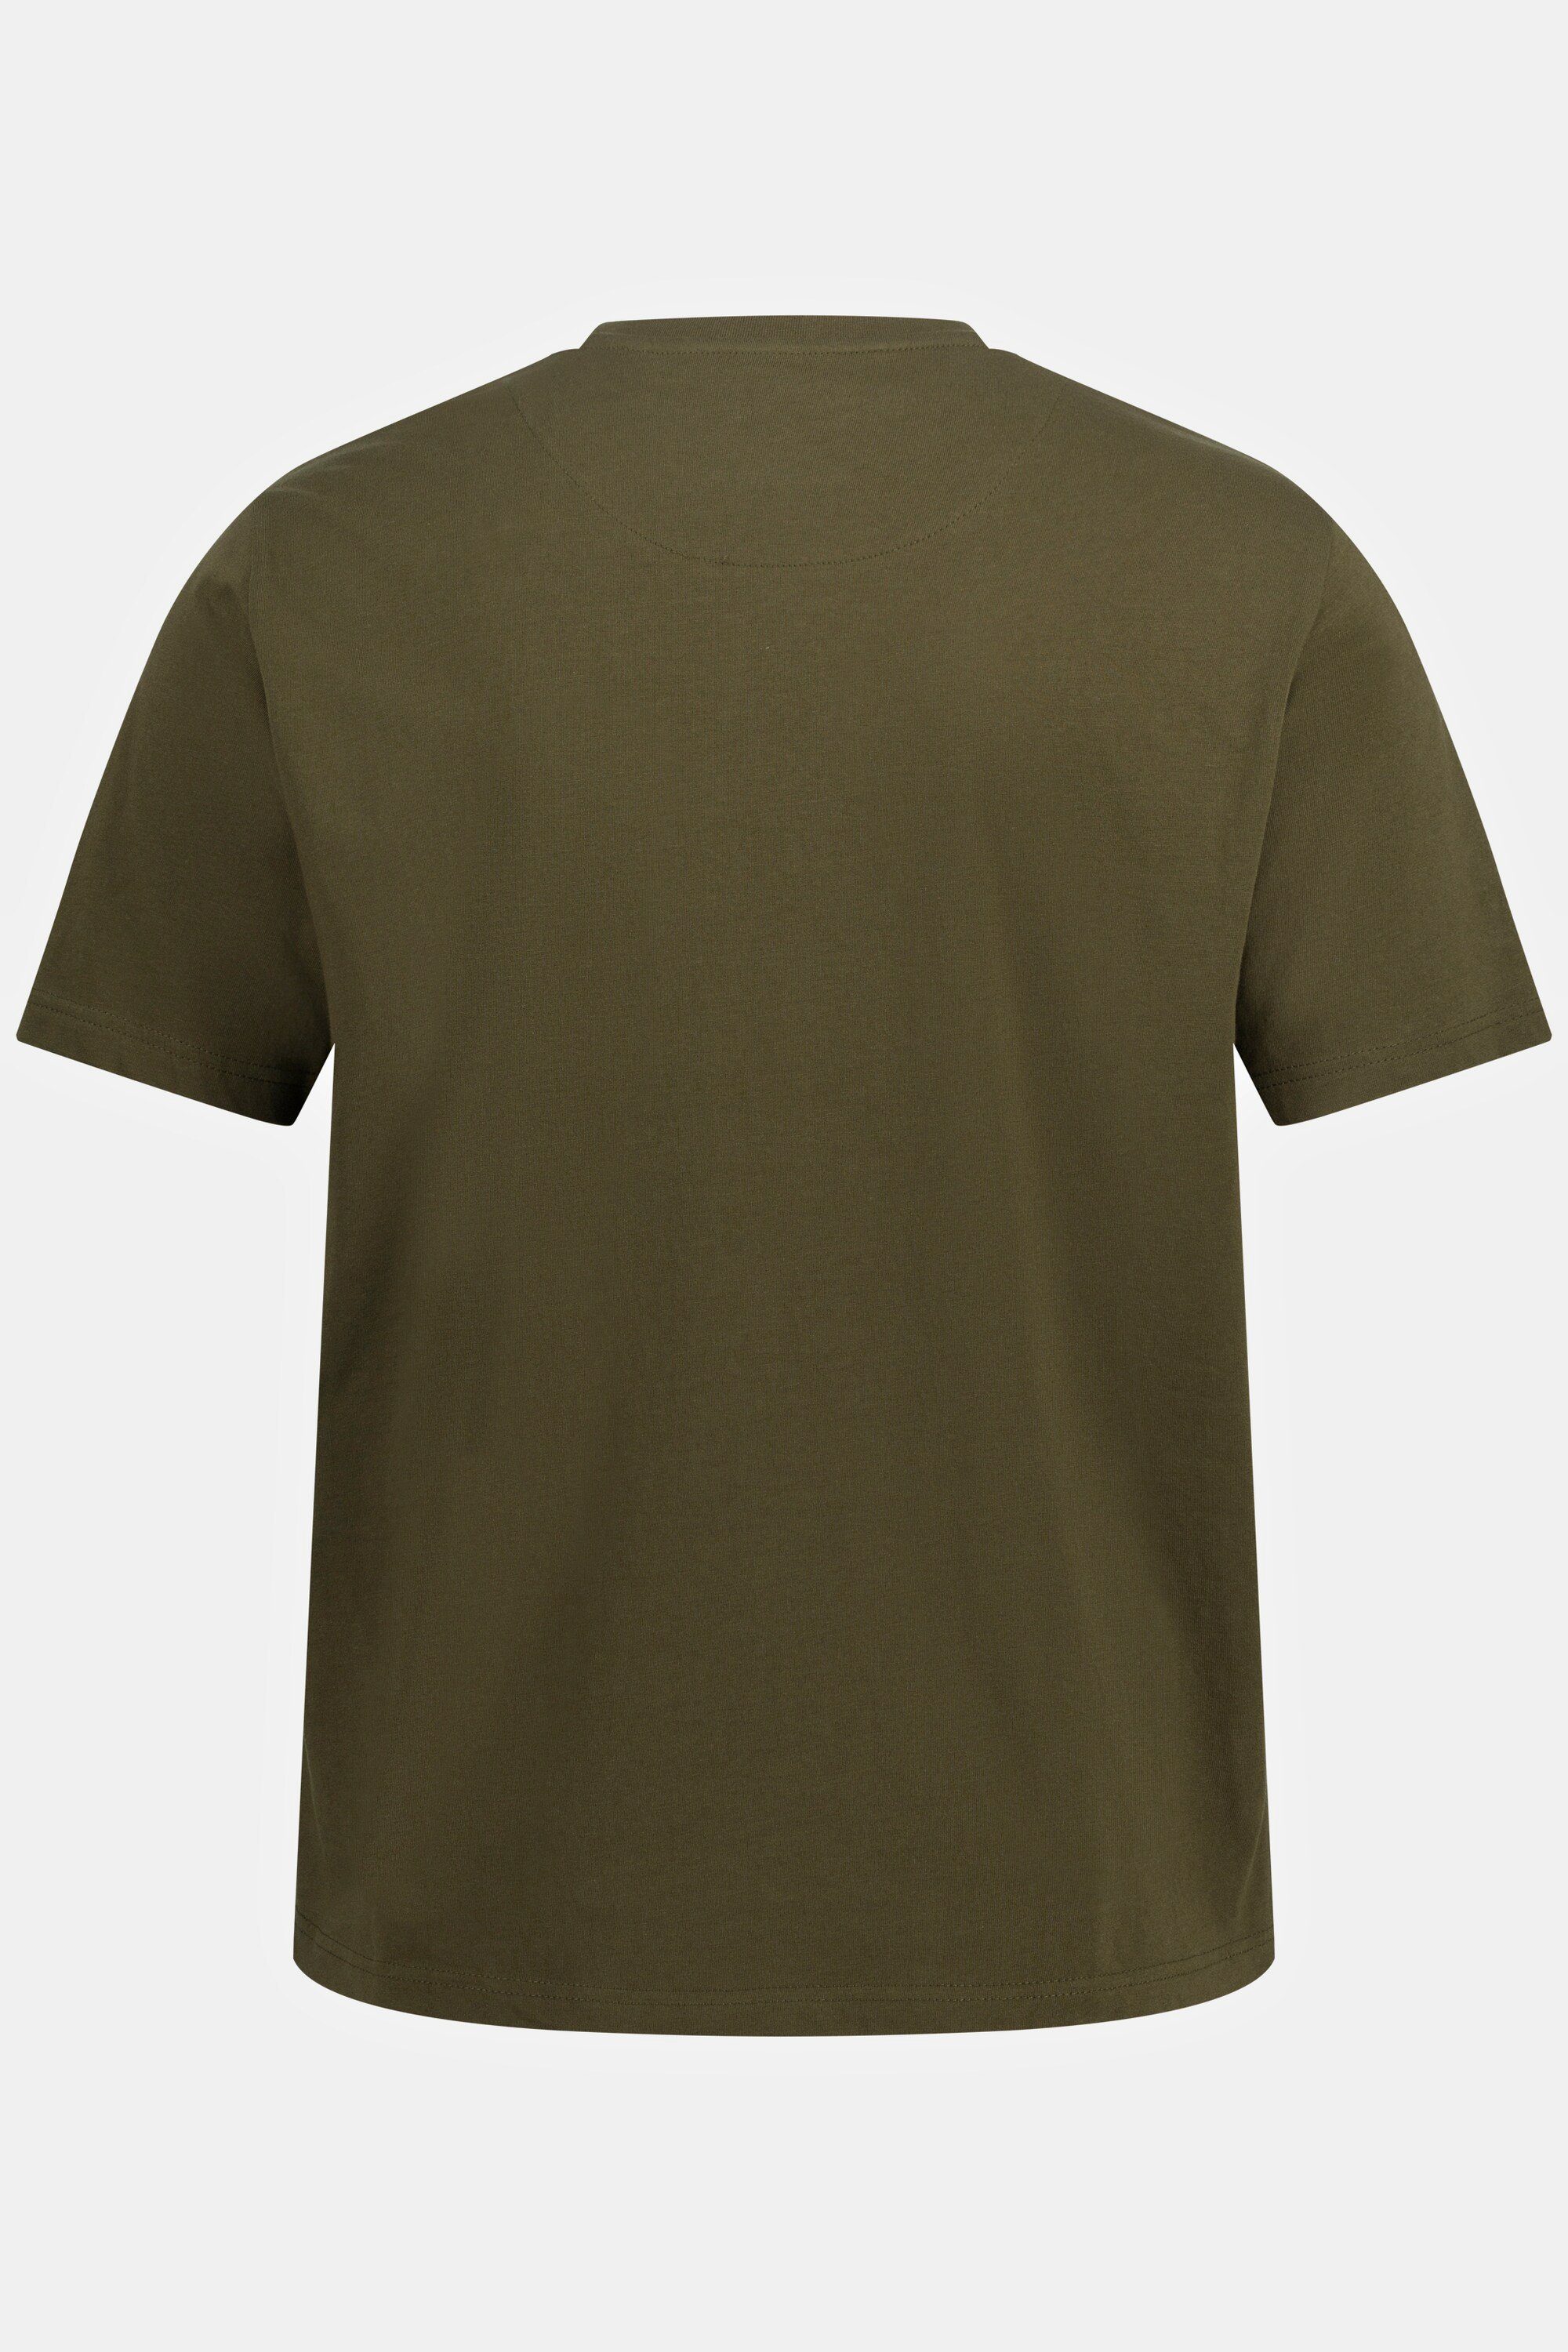 Halbarm tannengrün JP1880 T-Shirt Brusttasche T-Shirt